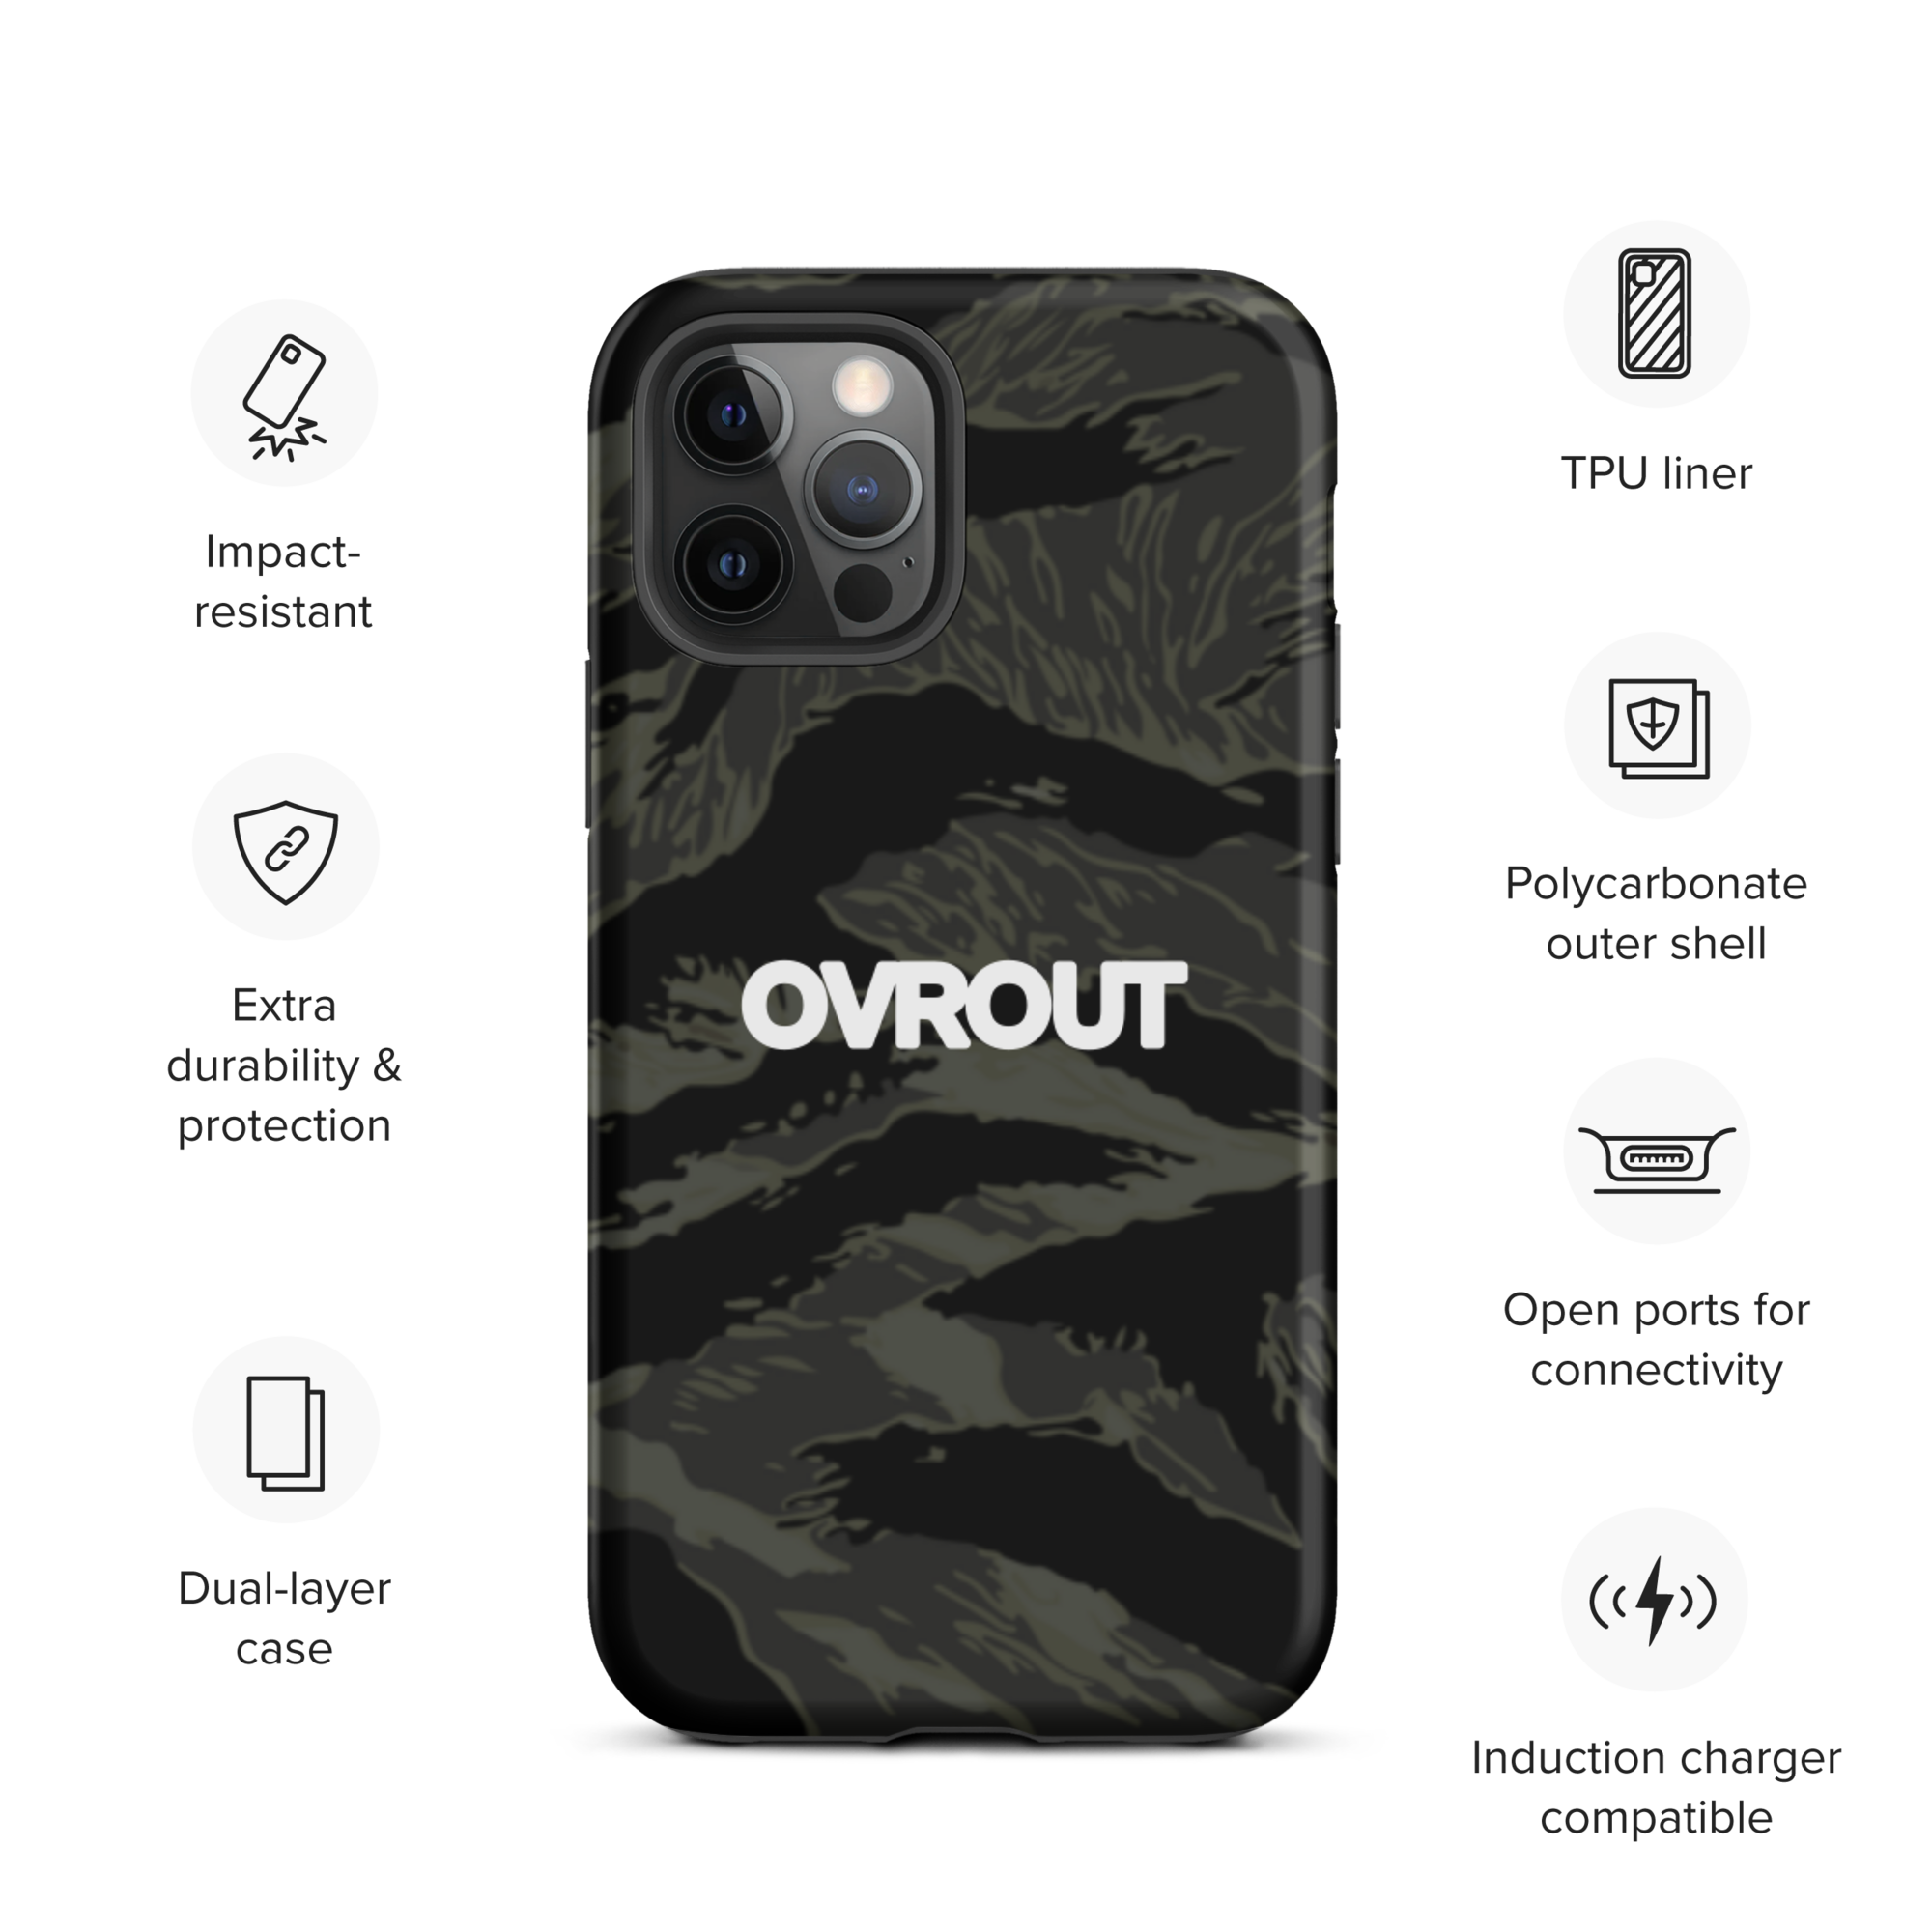 Black Tigerstripe iPhone case - OVR & OUT